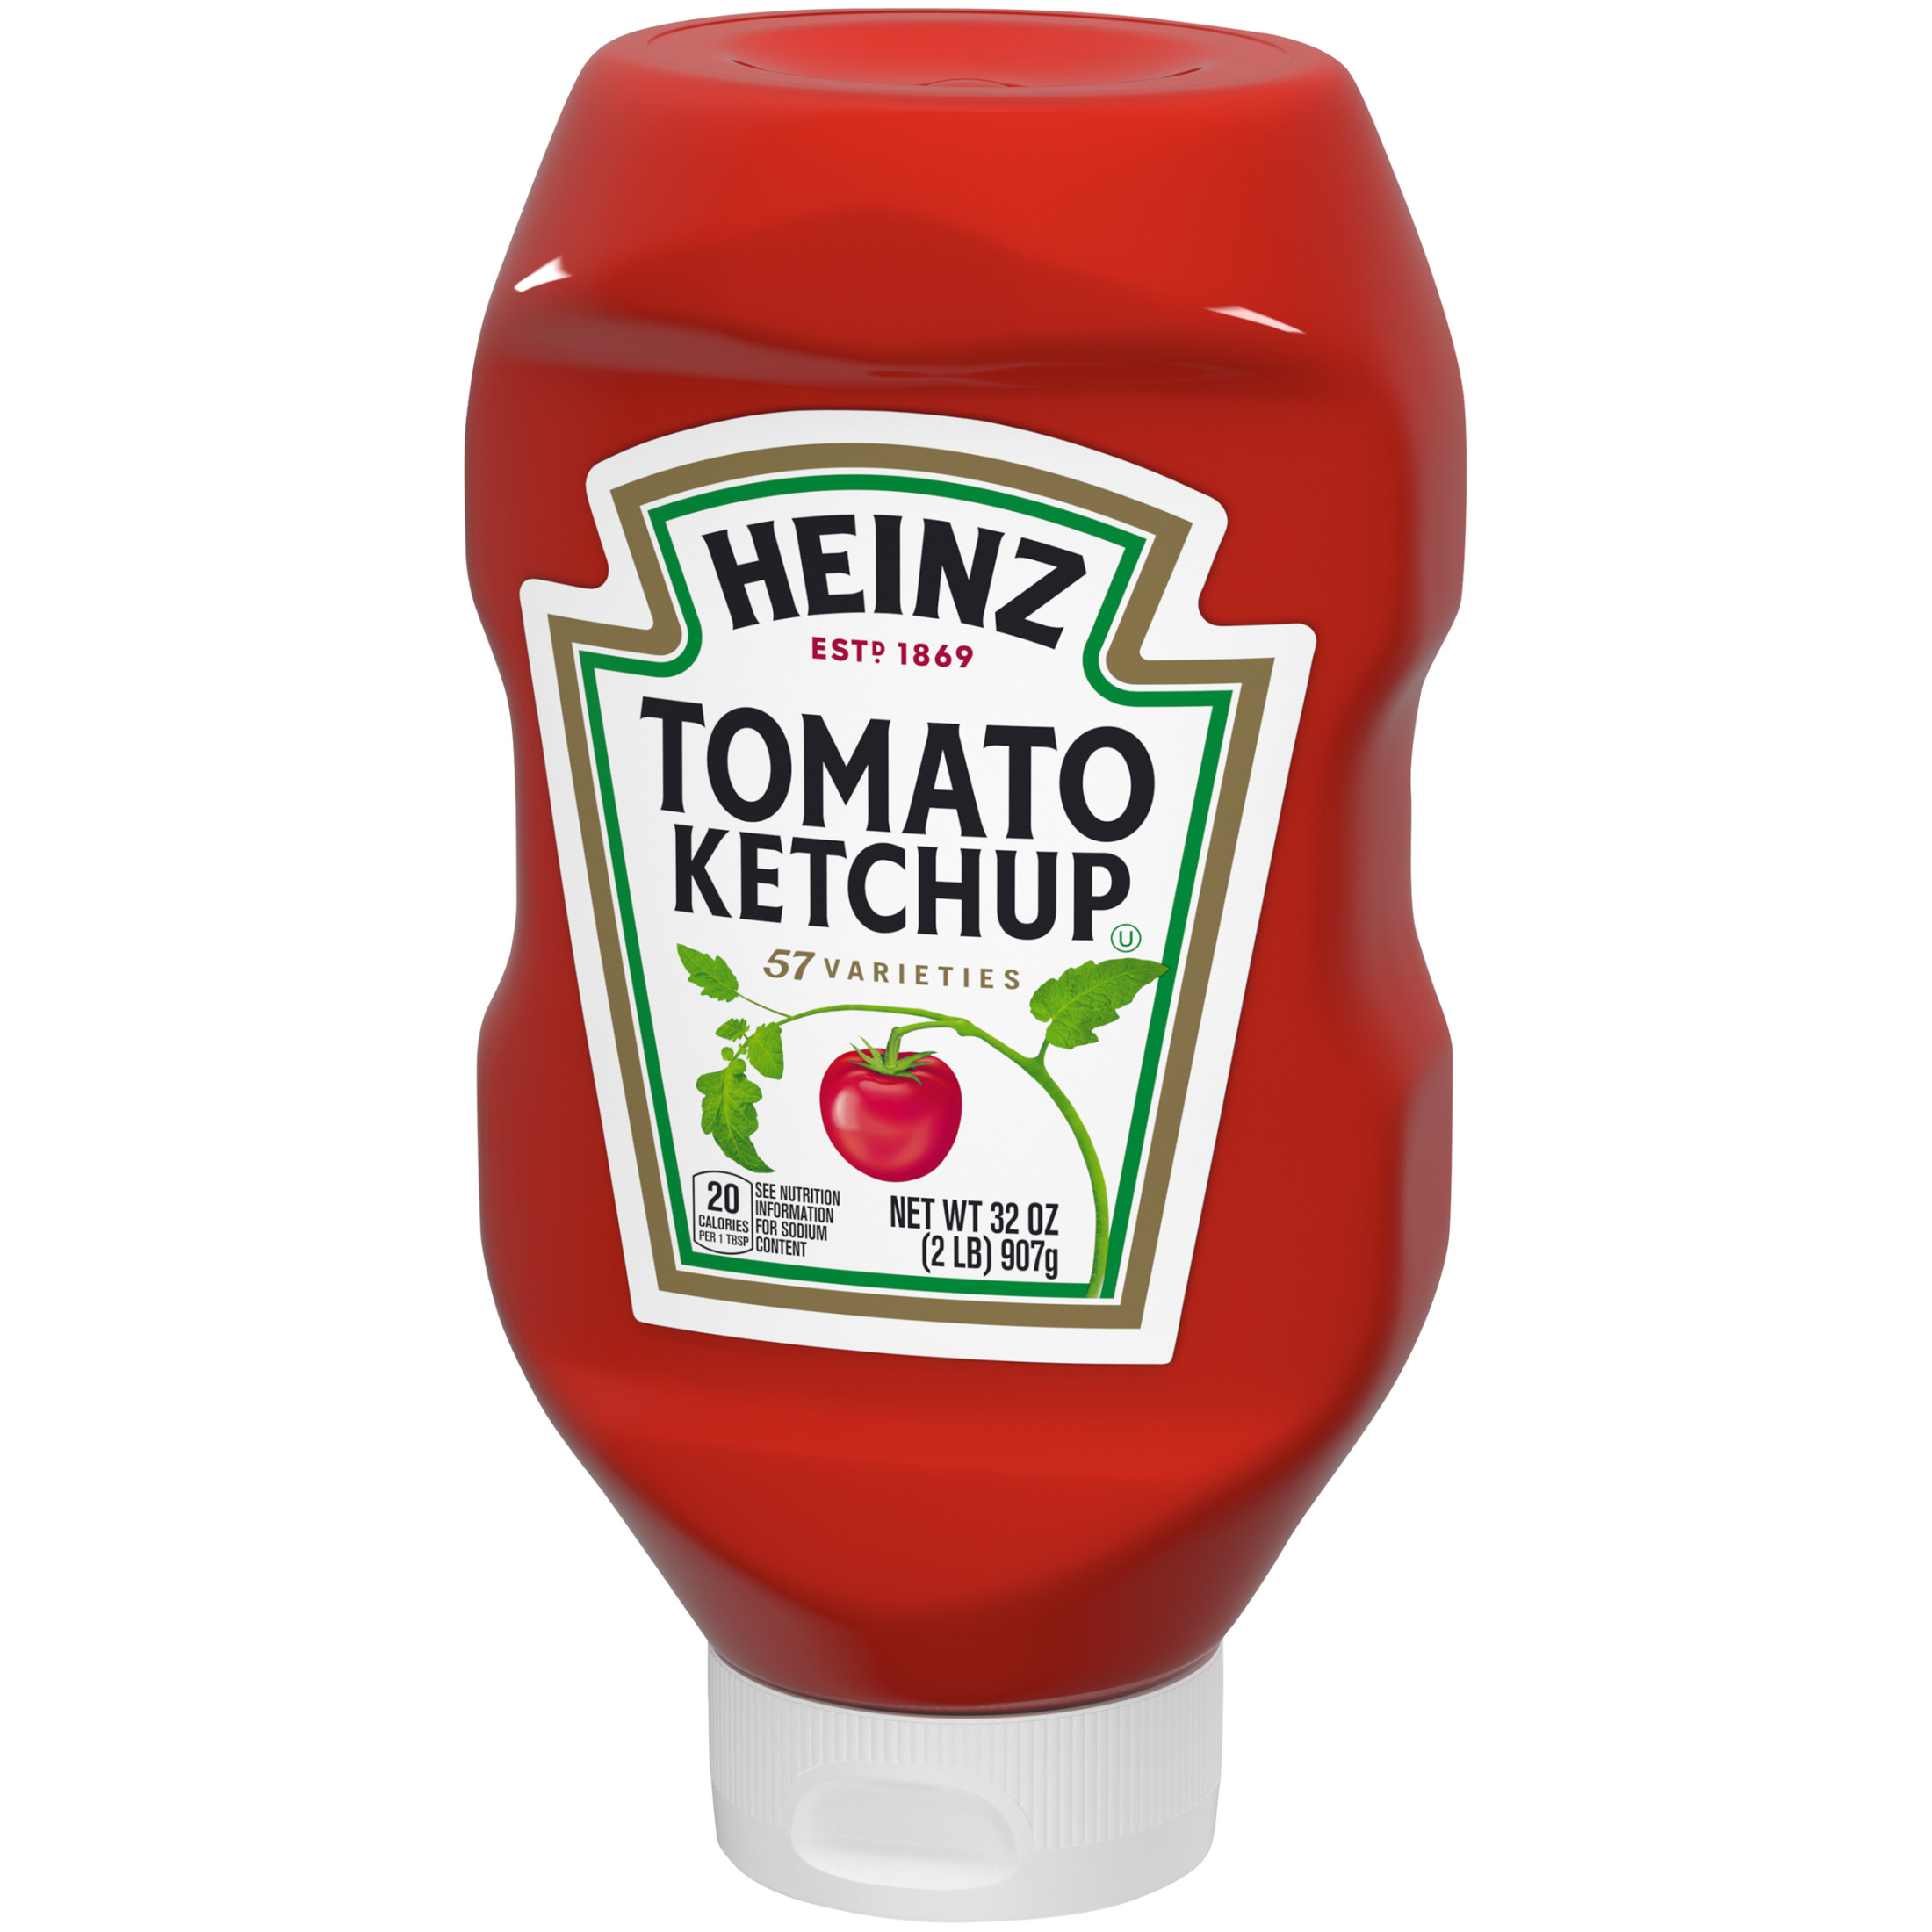 Heinz Tomato Ketchup, 32 oz Bottle - image 13 of 15